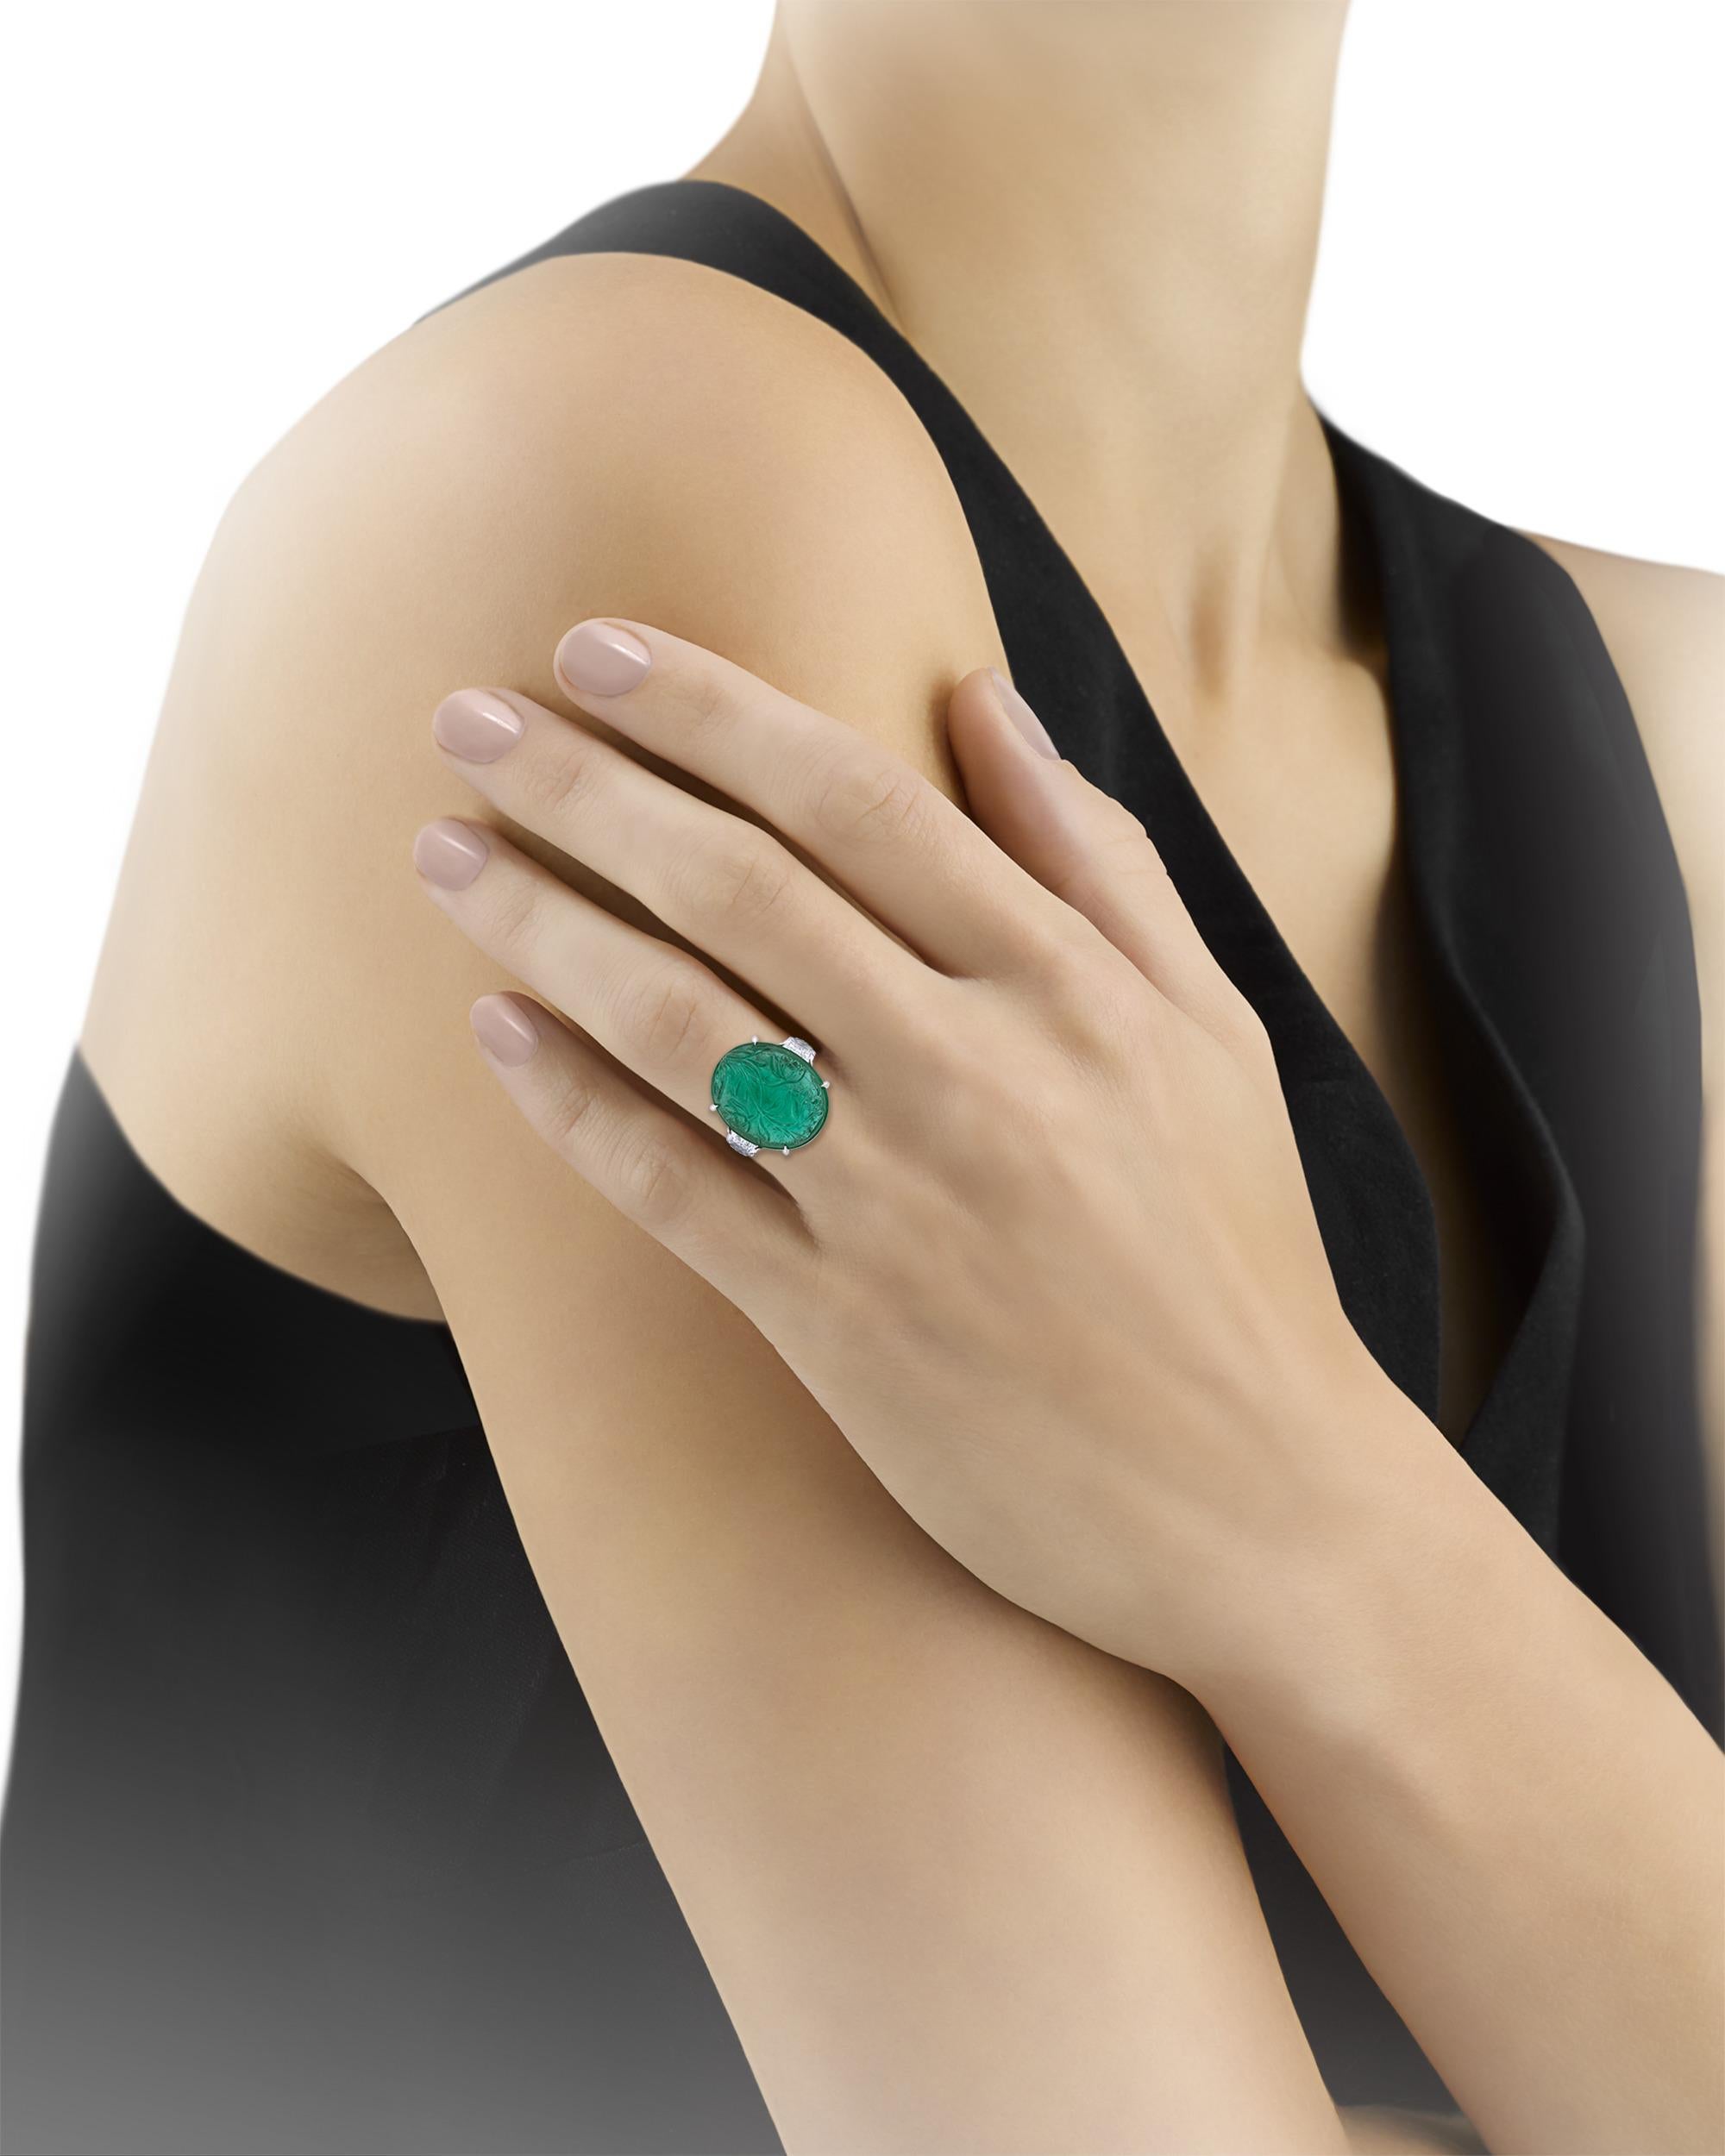 Uncut Carved Zambian Emerald Ring, 24.05 Carats